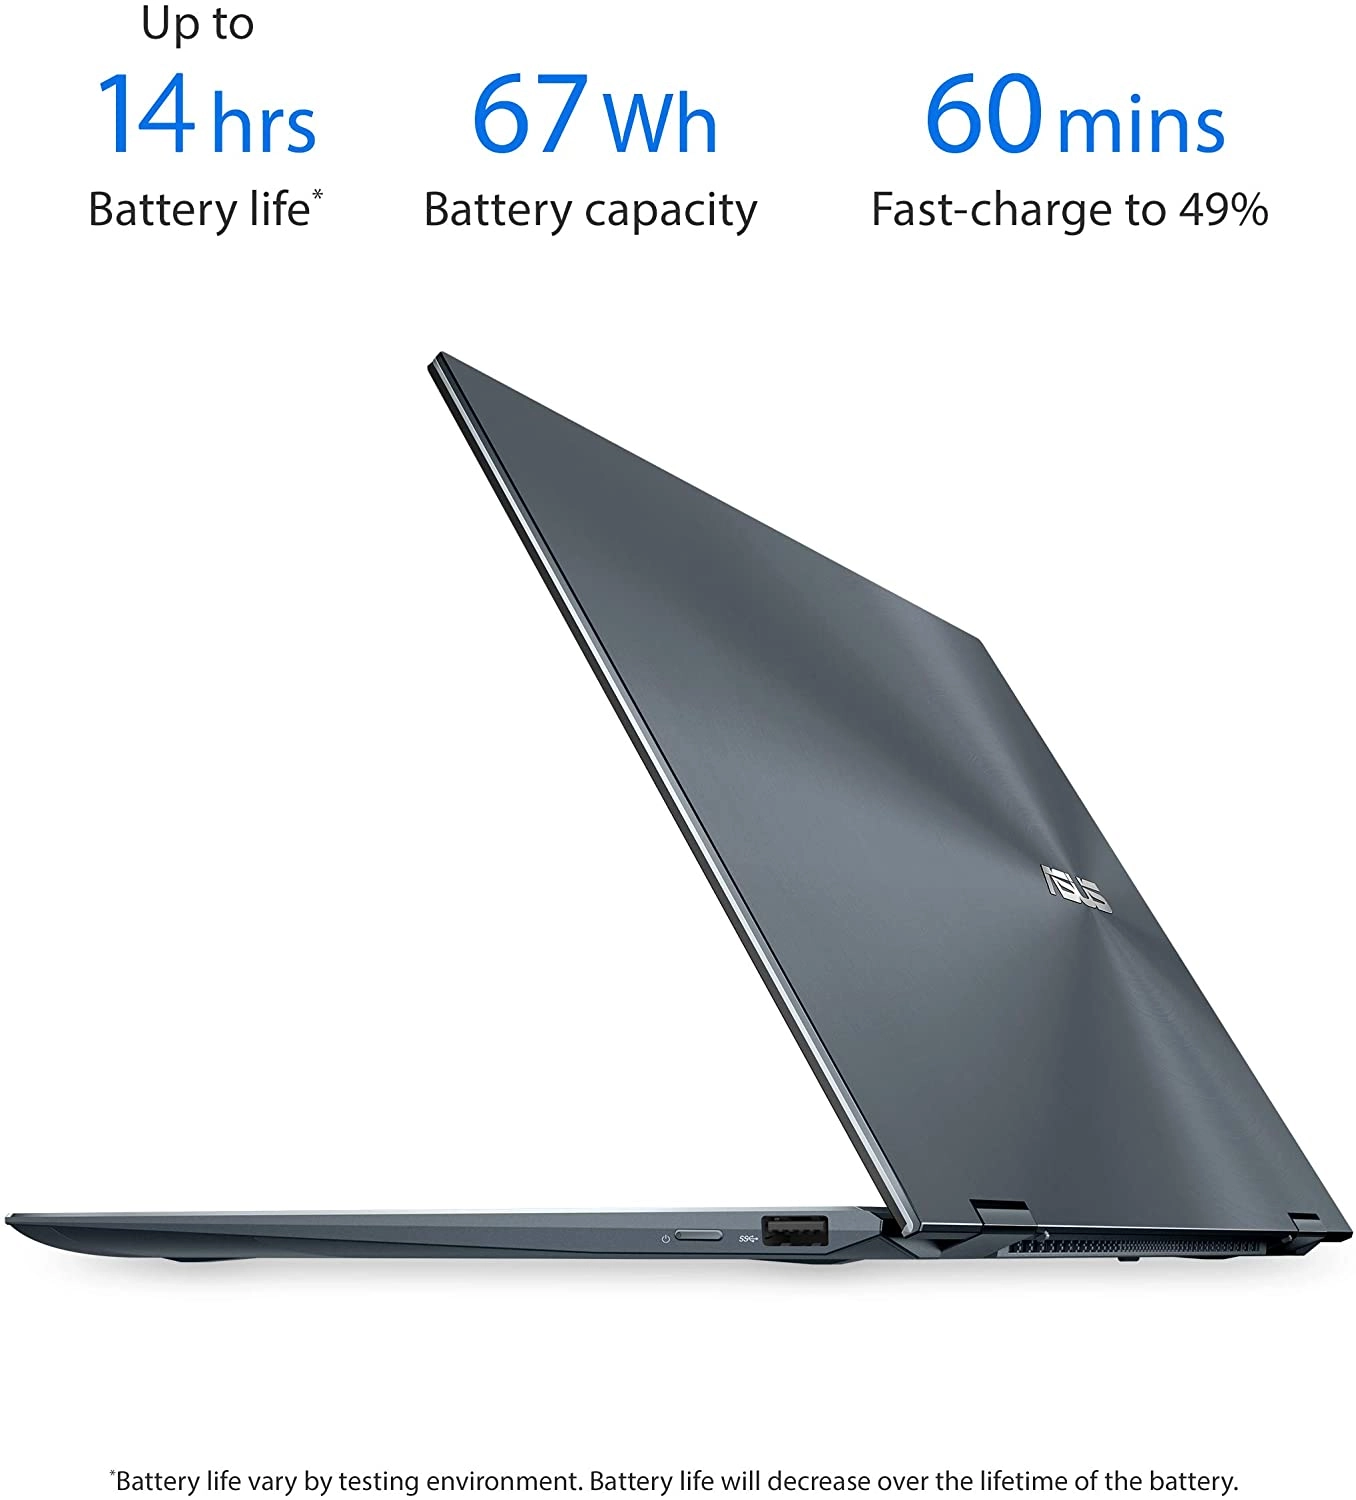 Asus ZenBook Flip 13 laptop image